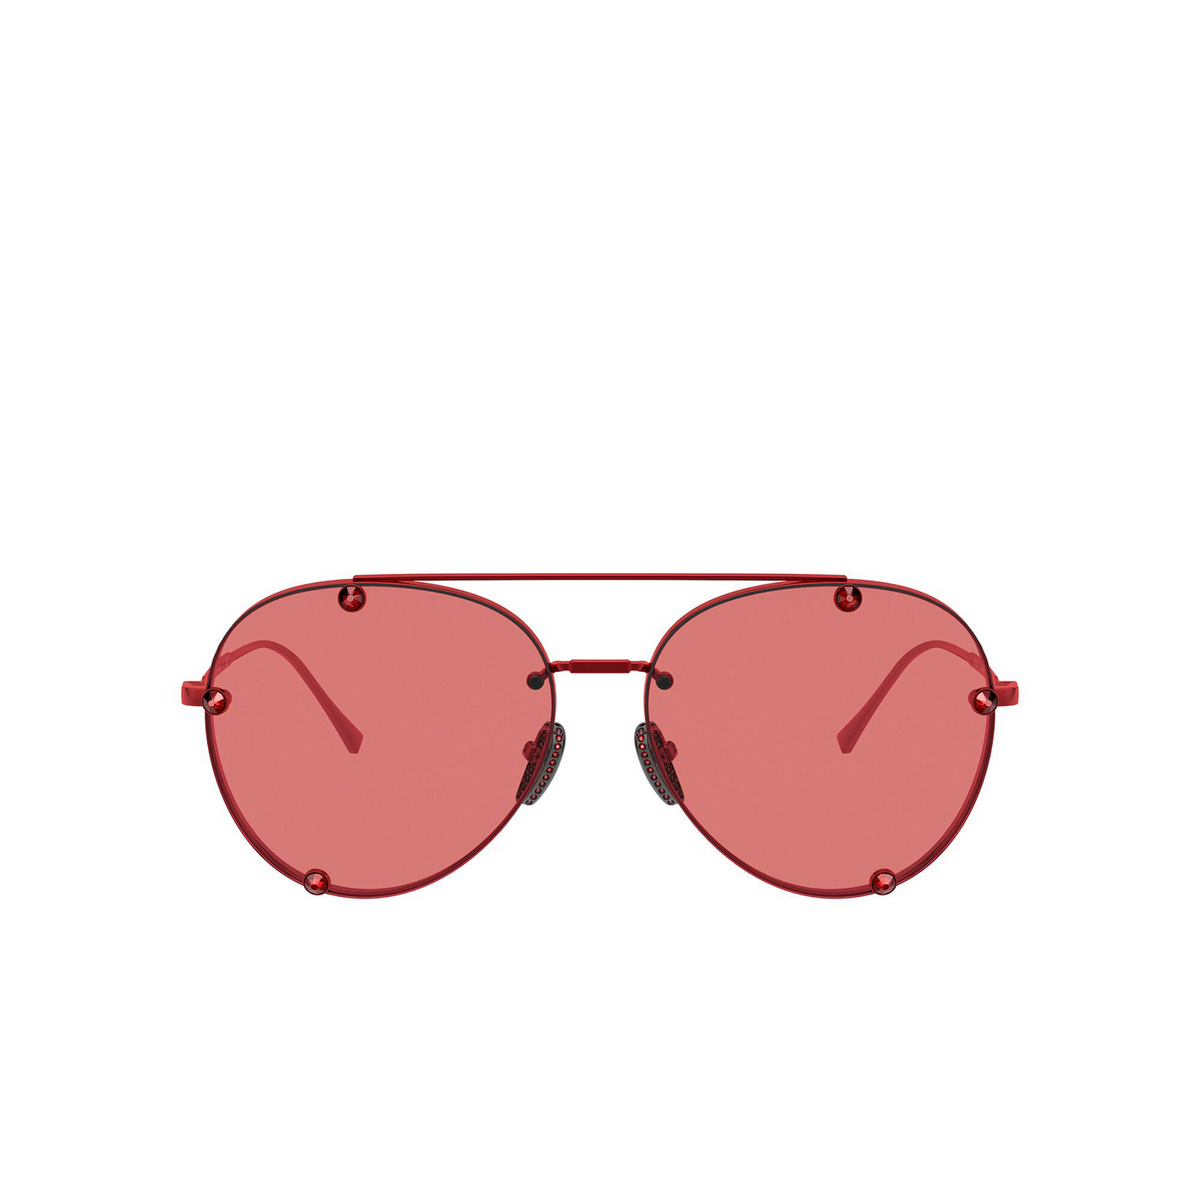 Valentino® Aviator Sunglasses: VA2045 color Red 305484 - front view.